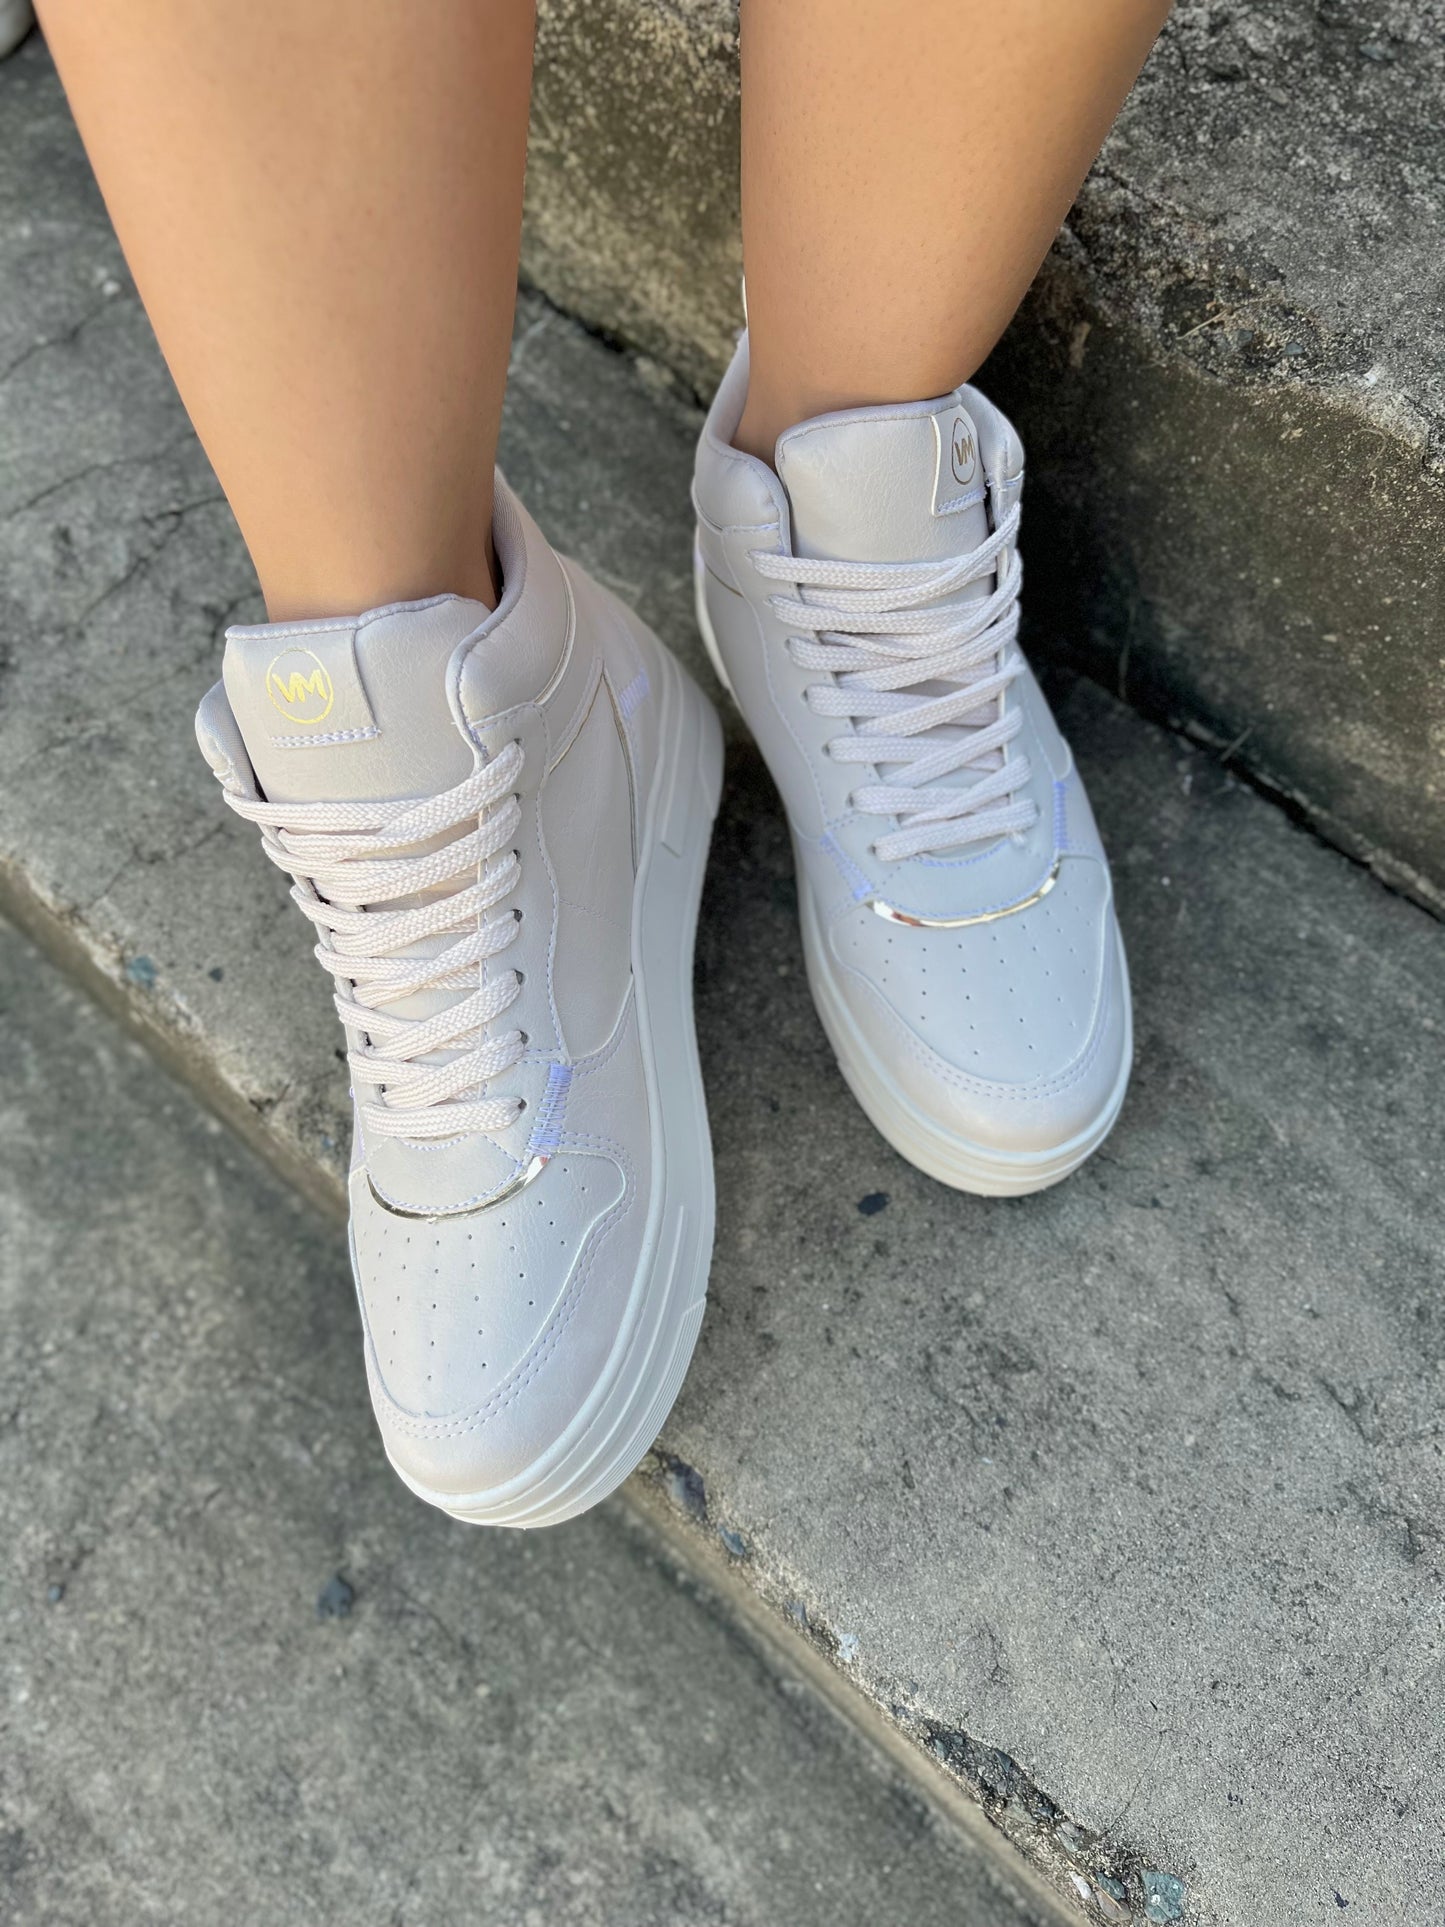 Stacy Sneaker Boot